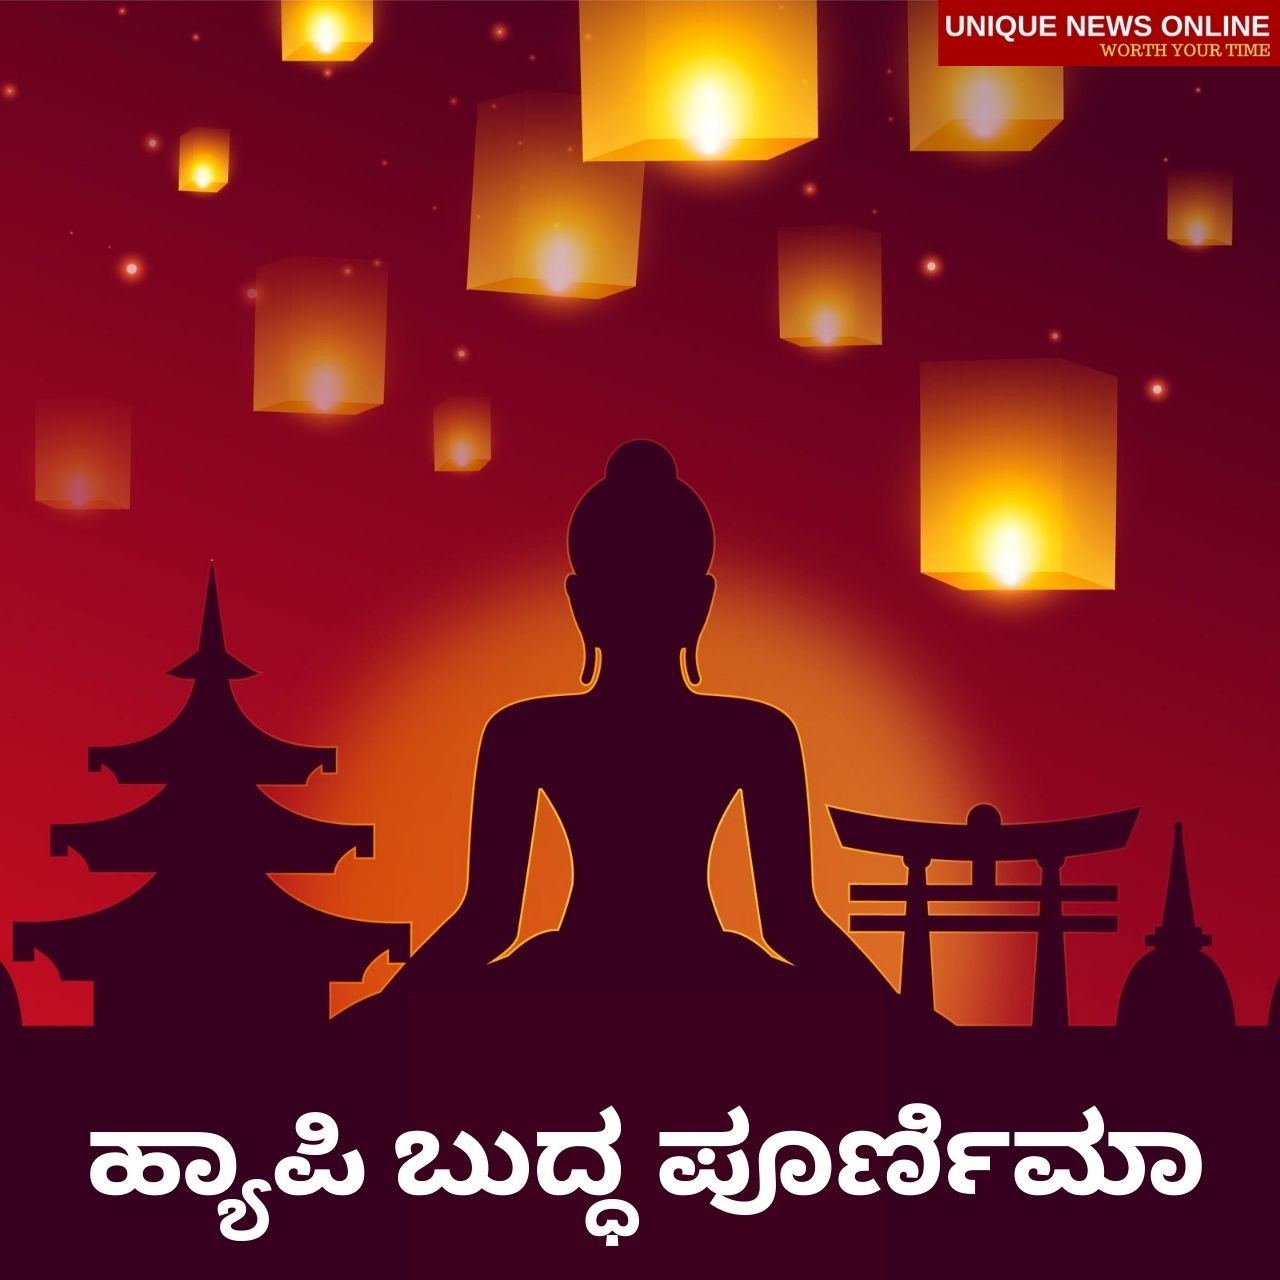 Buddha Jayanti Greetings in Kannada